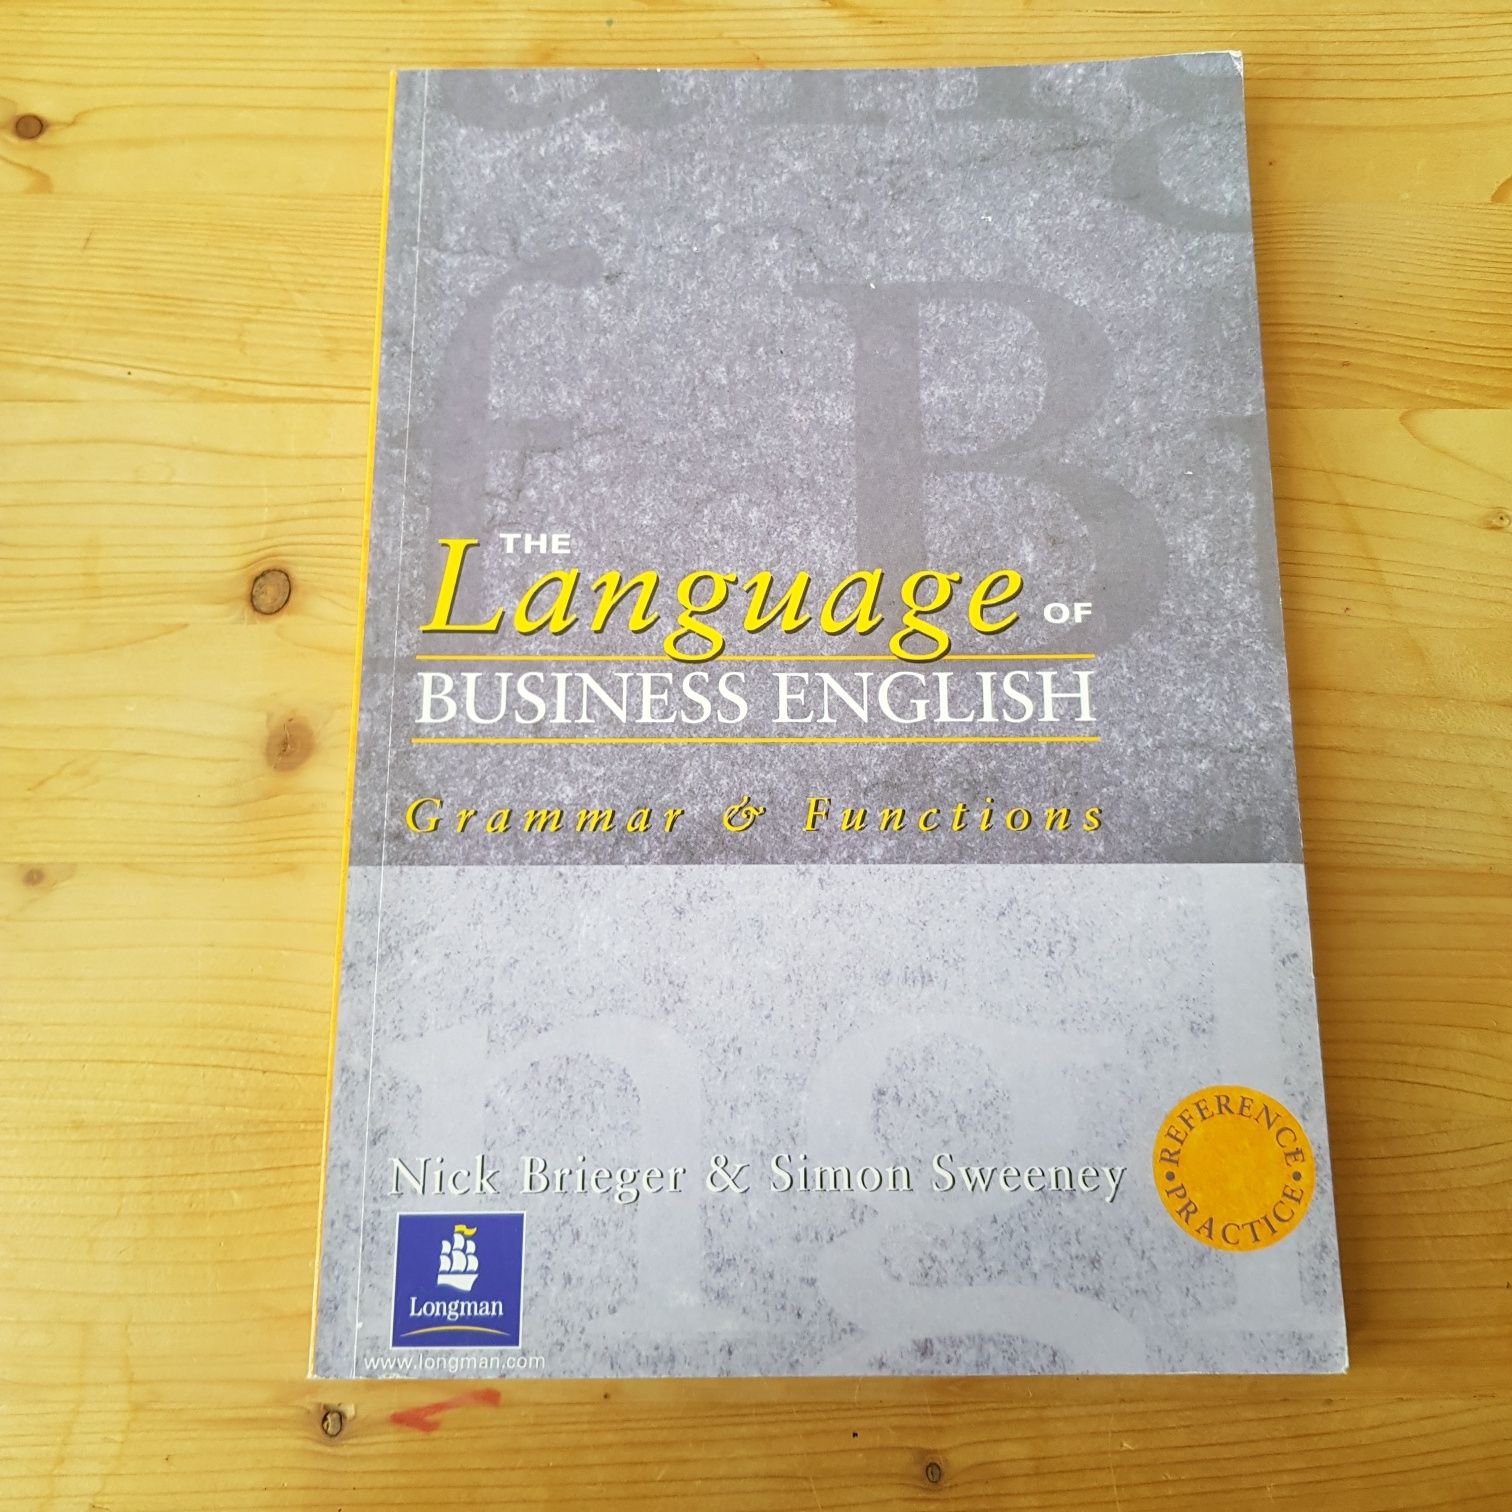 The Language of Business English angielski biznes gramatyka